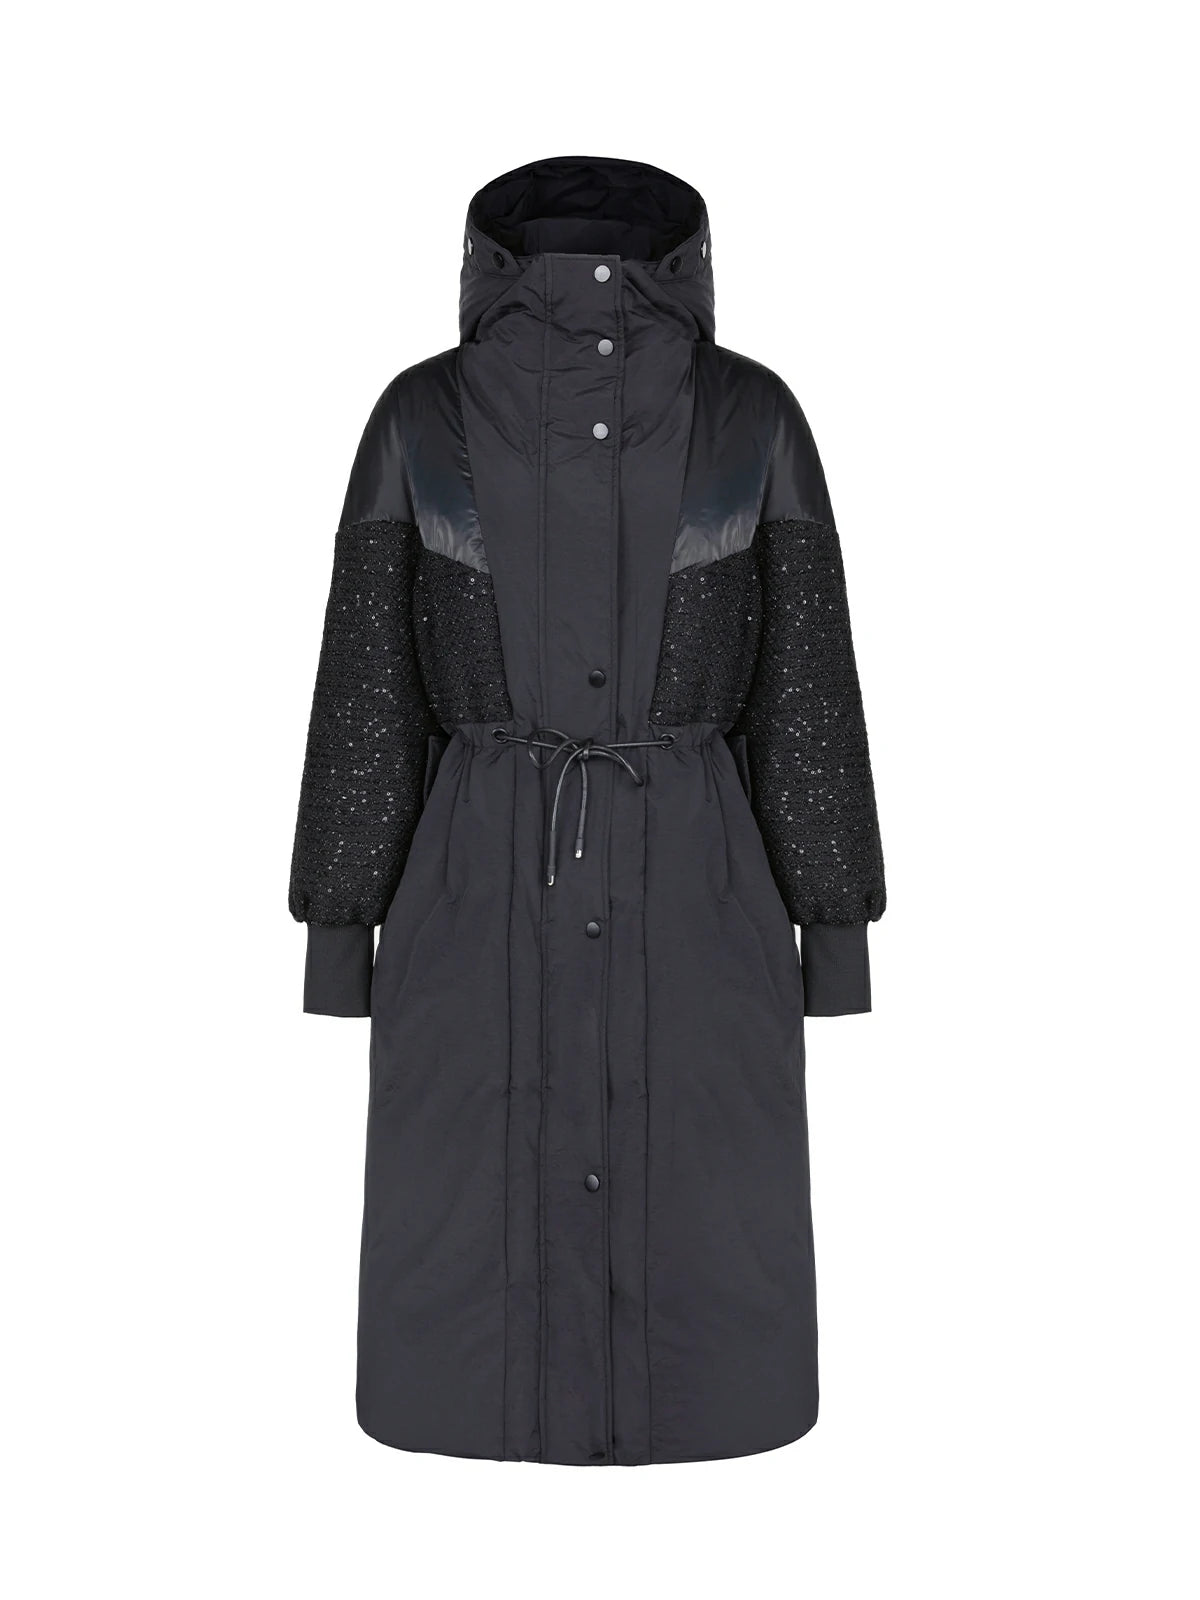 Sequin-embellished long down jacket with adjustable fit